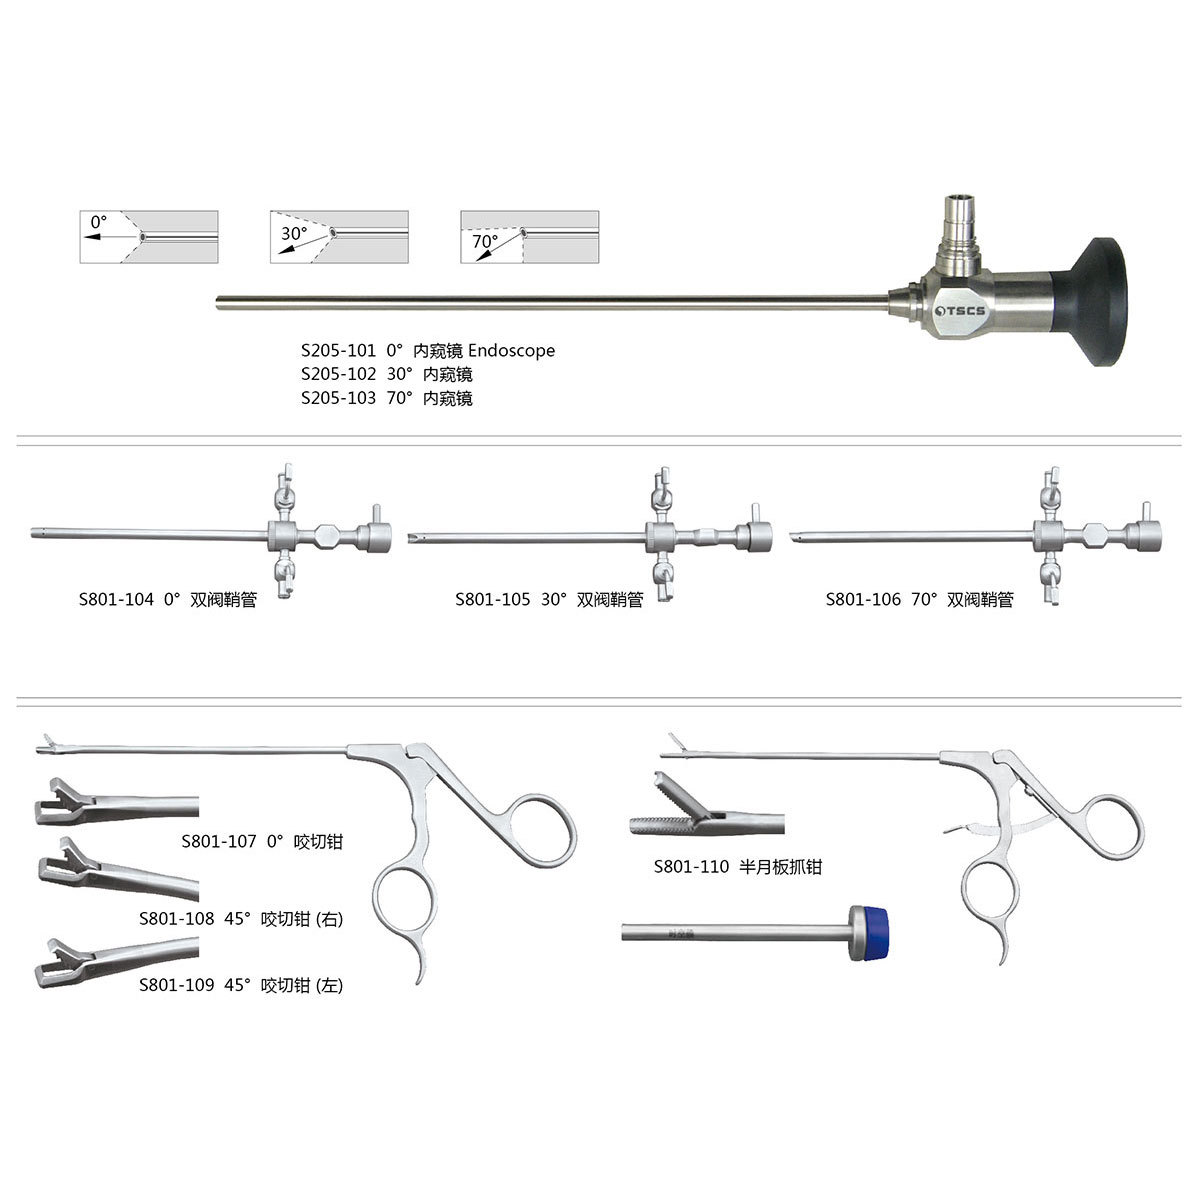 Arthroscopic surgical instruments